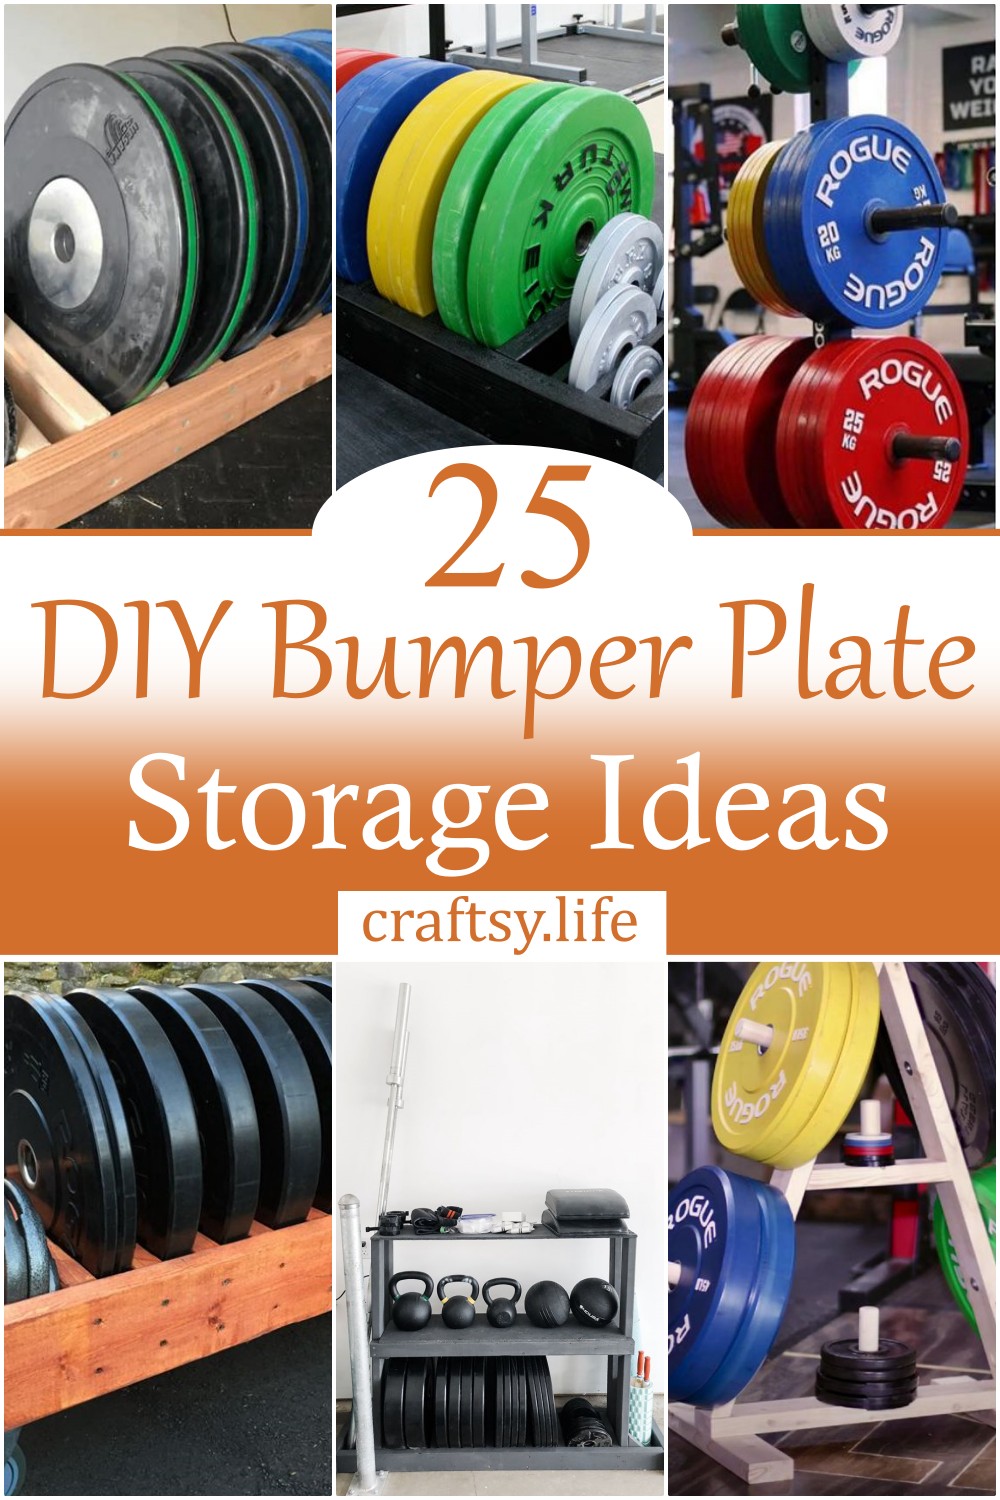 DIY Bumper Plate Storage Ideas